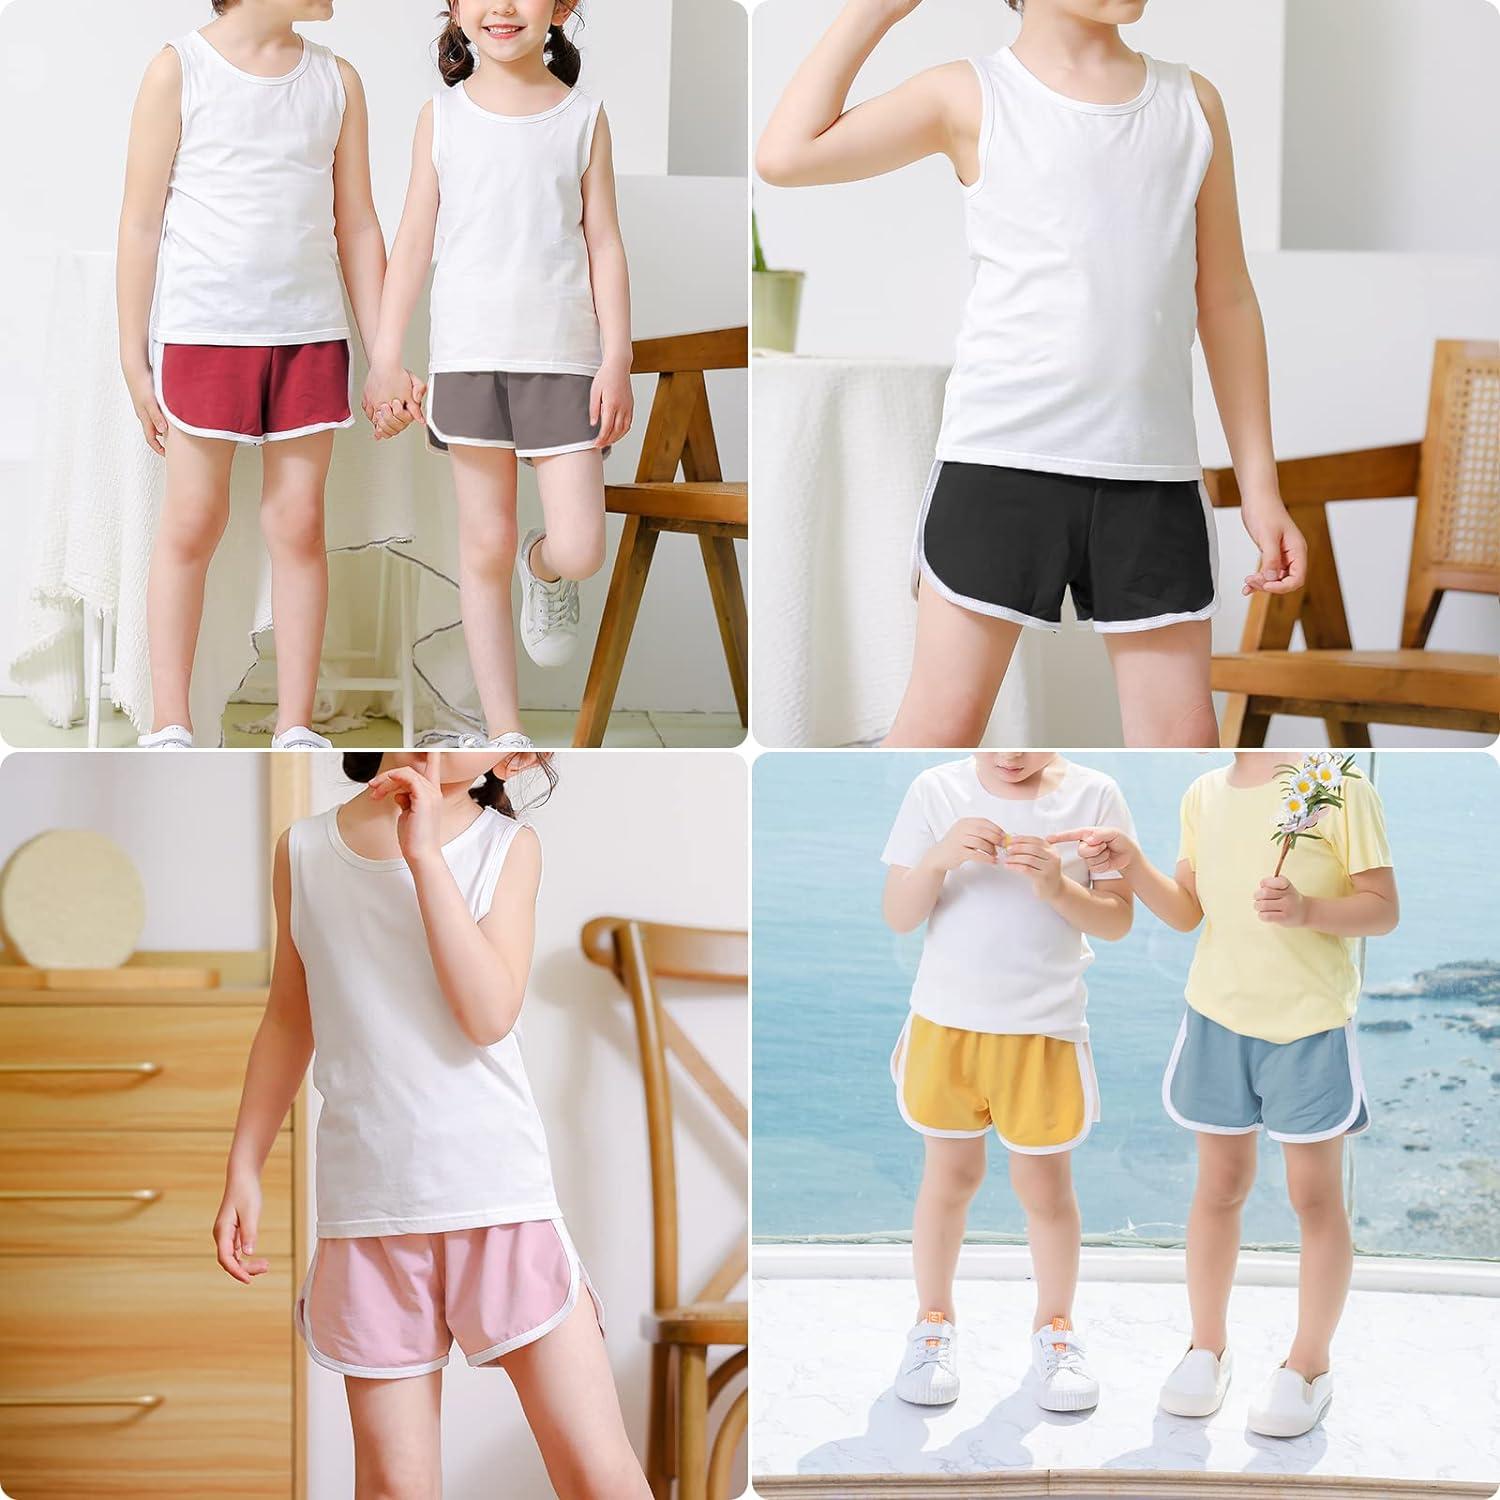 Auranso Toddler Boys Girls Active Running Shorts 3 Pack Kids Cotton Beach  Sports Casual Short Pants 4-5T 3 Pack D